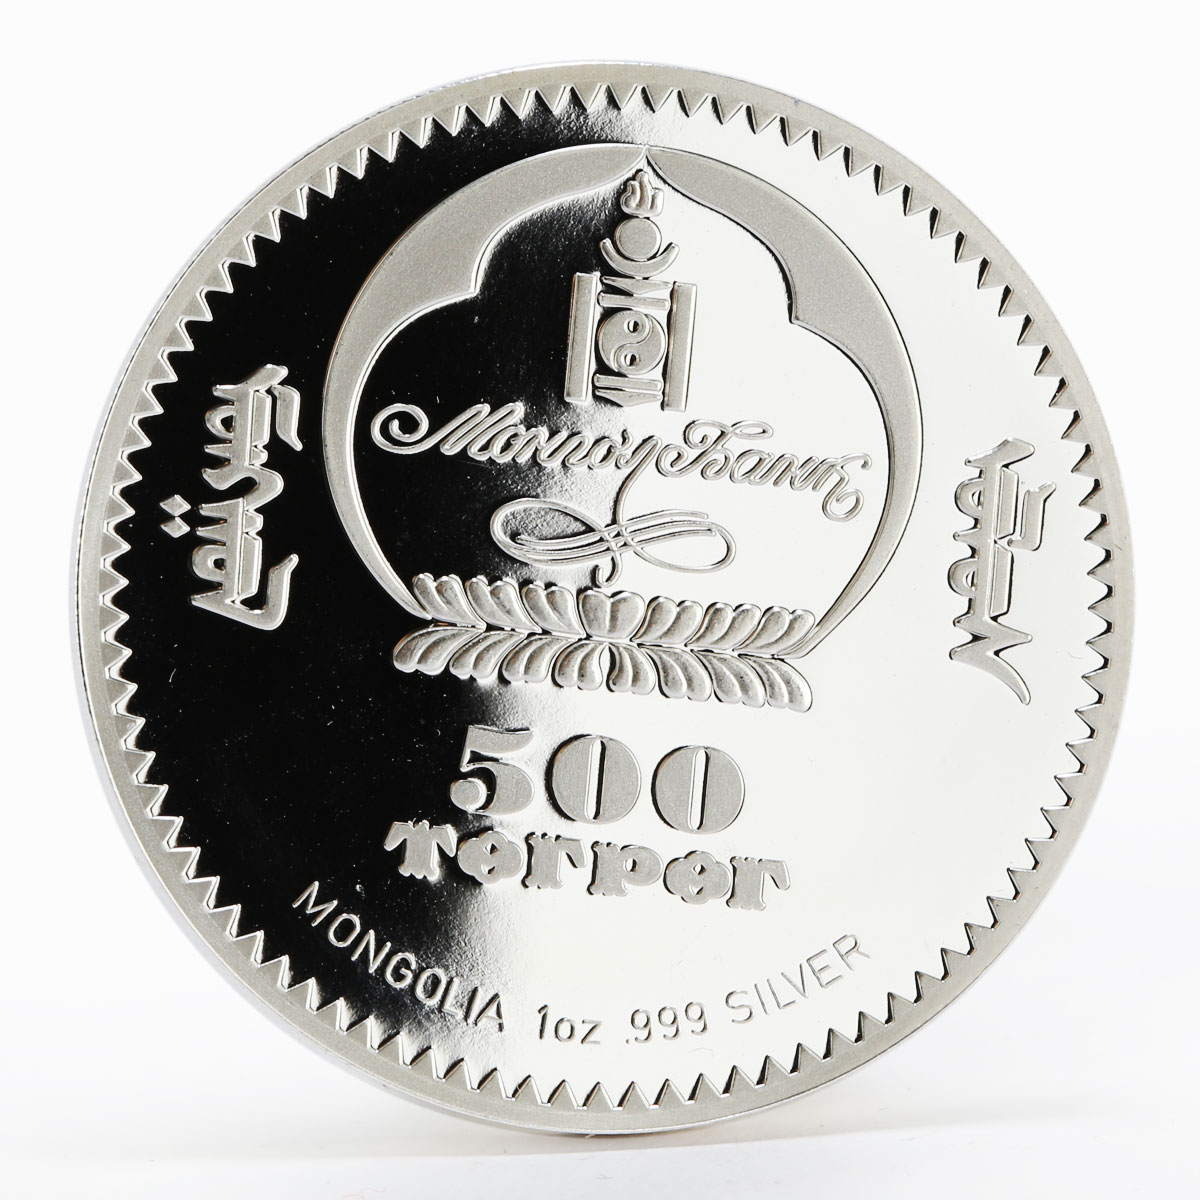 Mongolia 500 togrog Soviet Space Exploration Sputnik-2 colored silver coin 2007